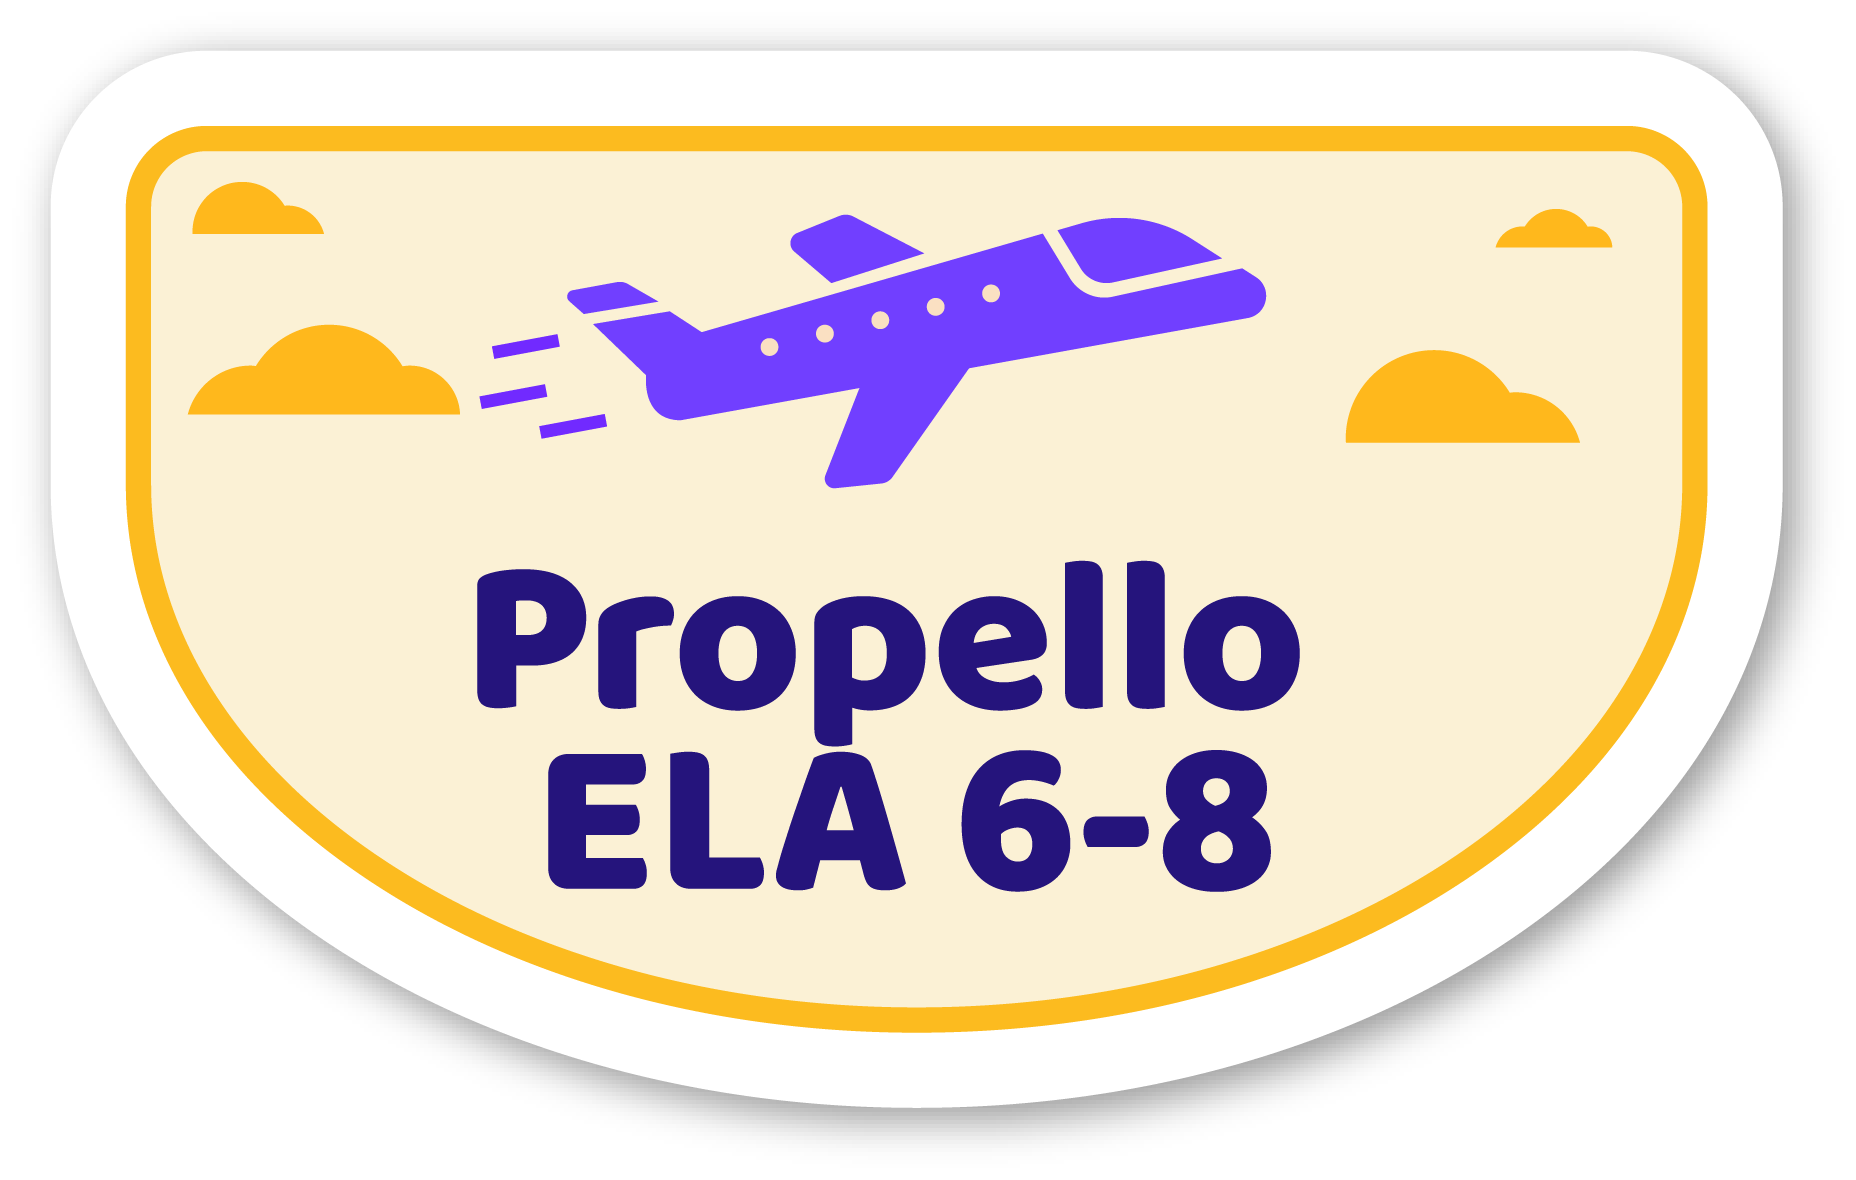 Image Representing Propello's ELA Curriculum for grades 6, 7, and 8